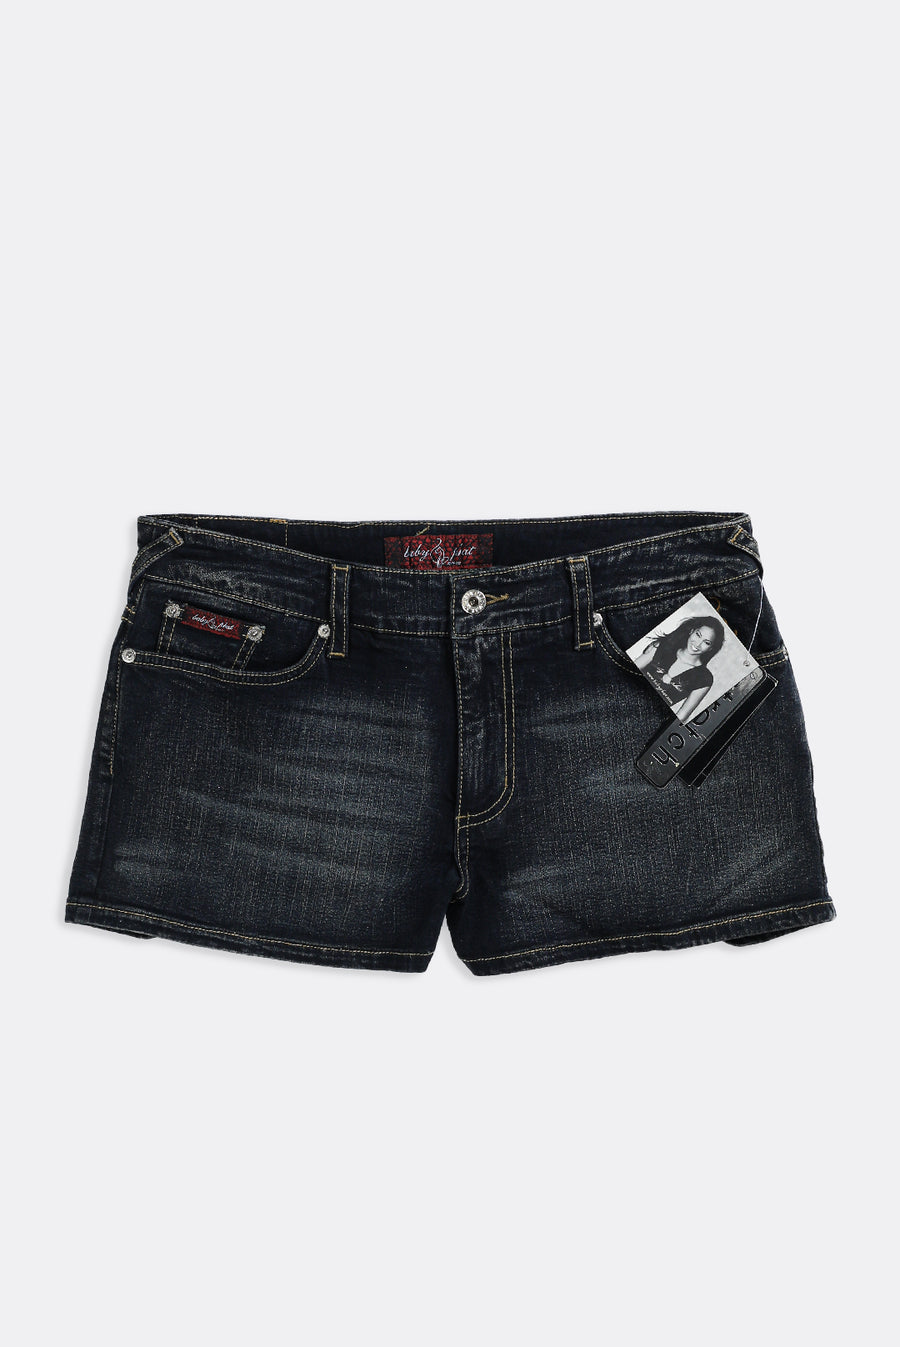 Deadstock Baby Phat Luminous Denim Shorts - W35